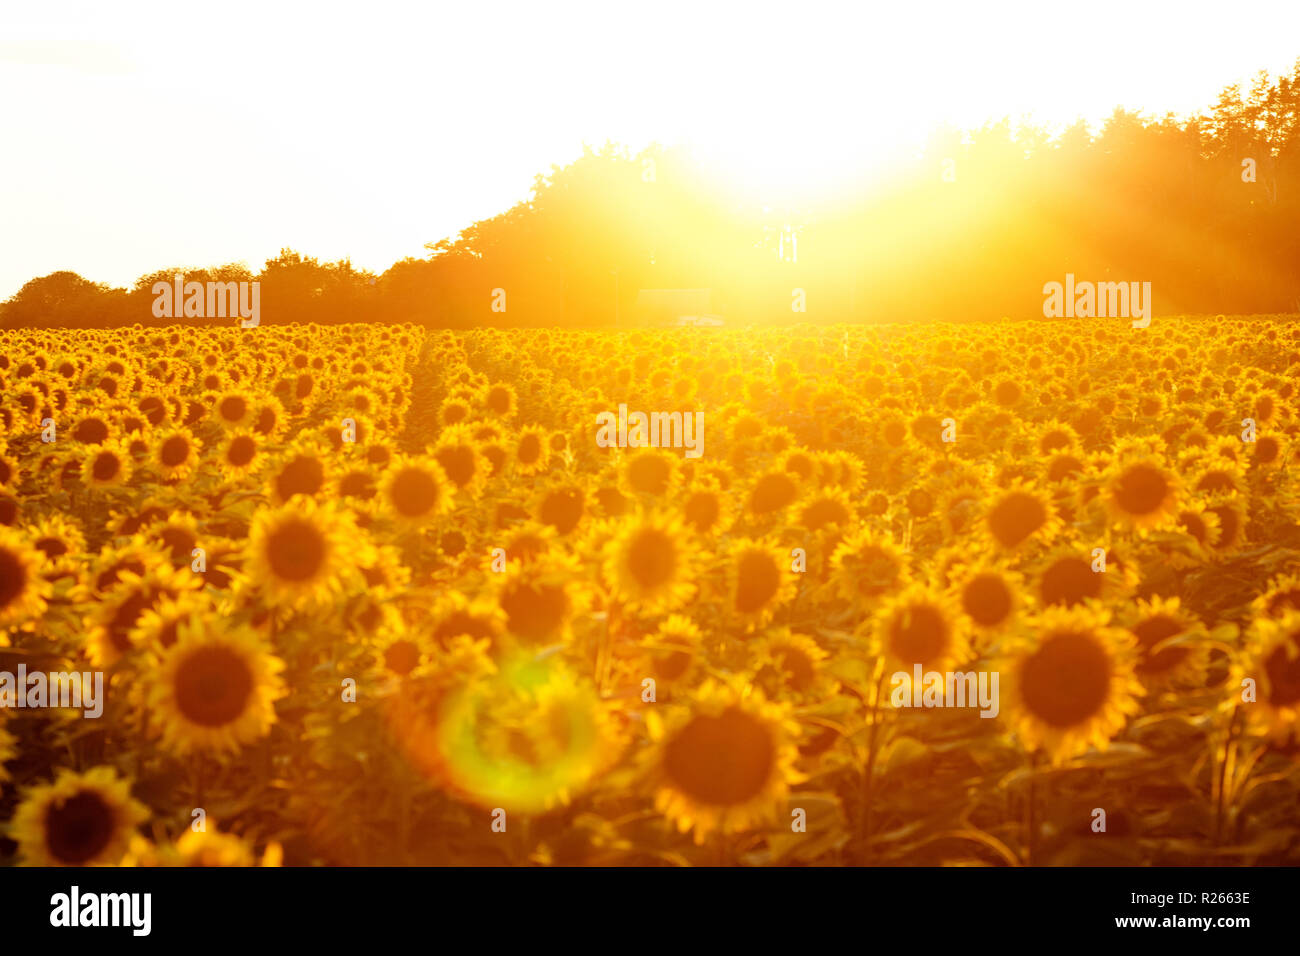 Sonnenblumenfeld bei Sonnenuntergang. Gefilterte Instagram Wirkung Stockfoto